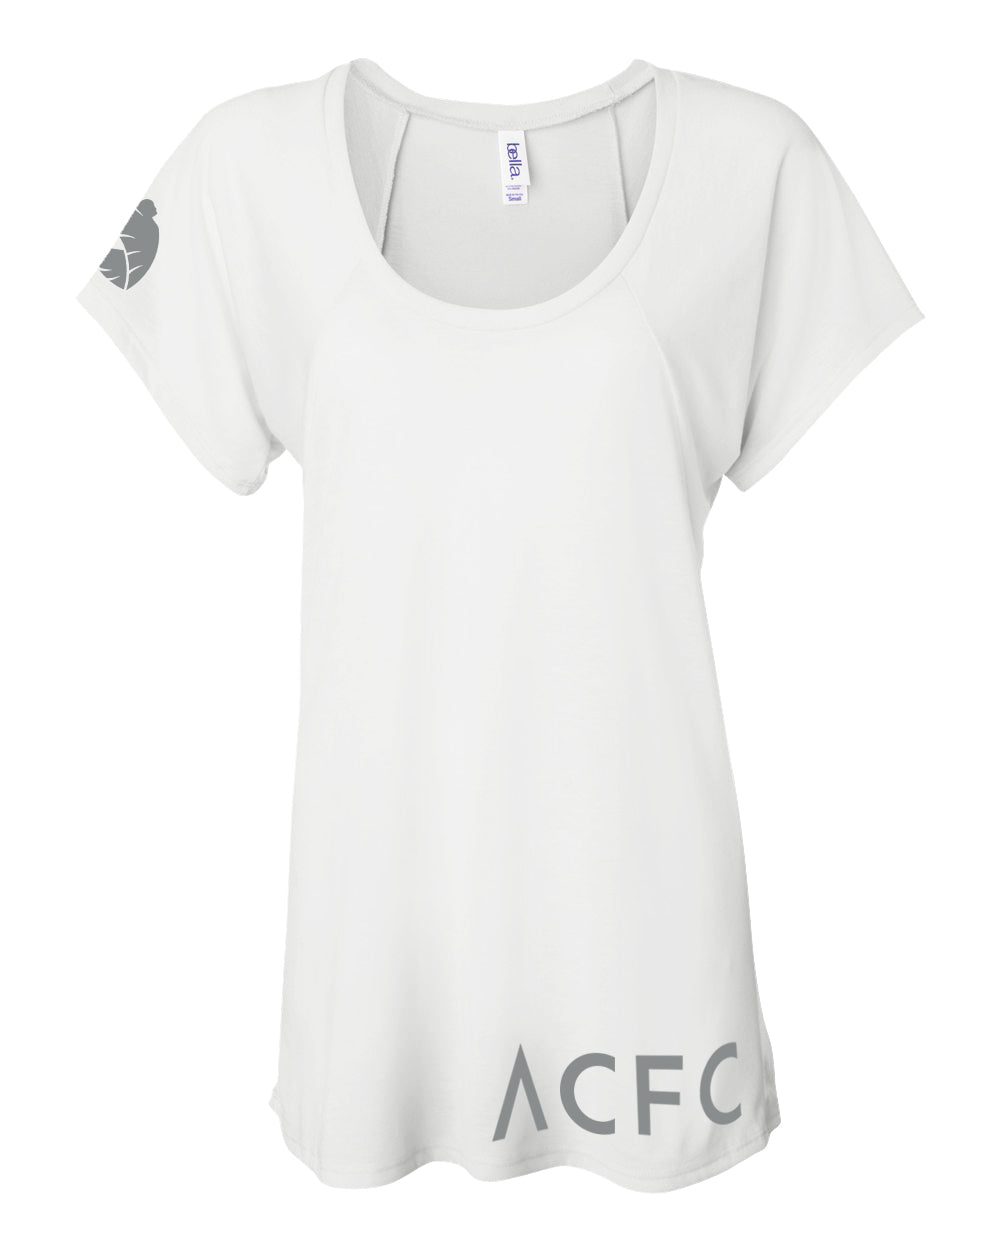 ACFCWomensRaglanShirt.jpg